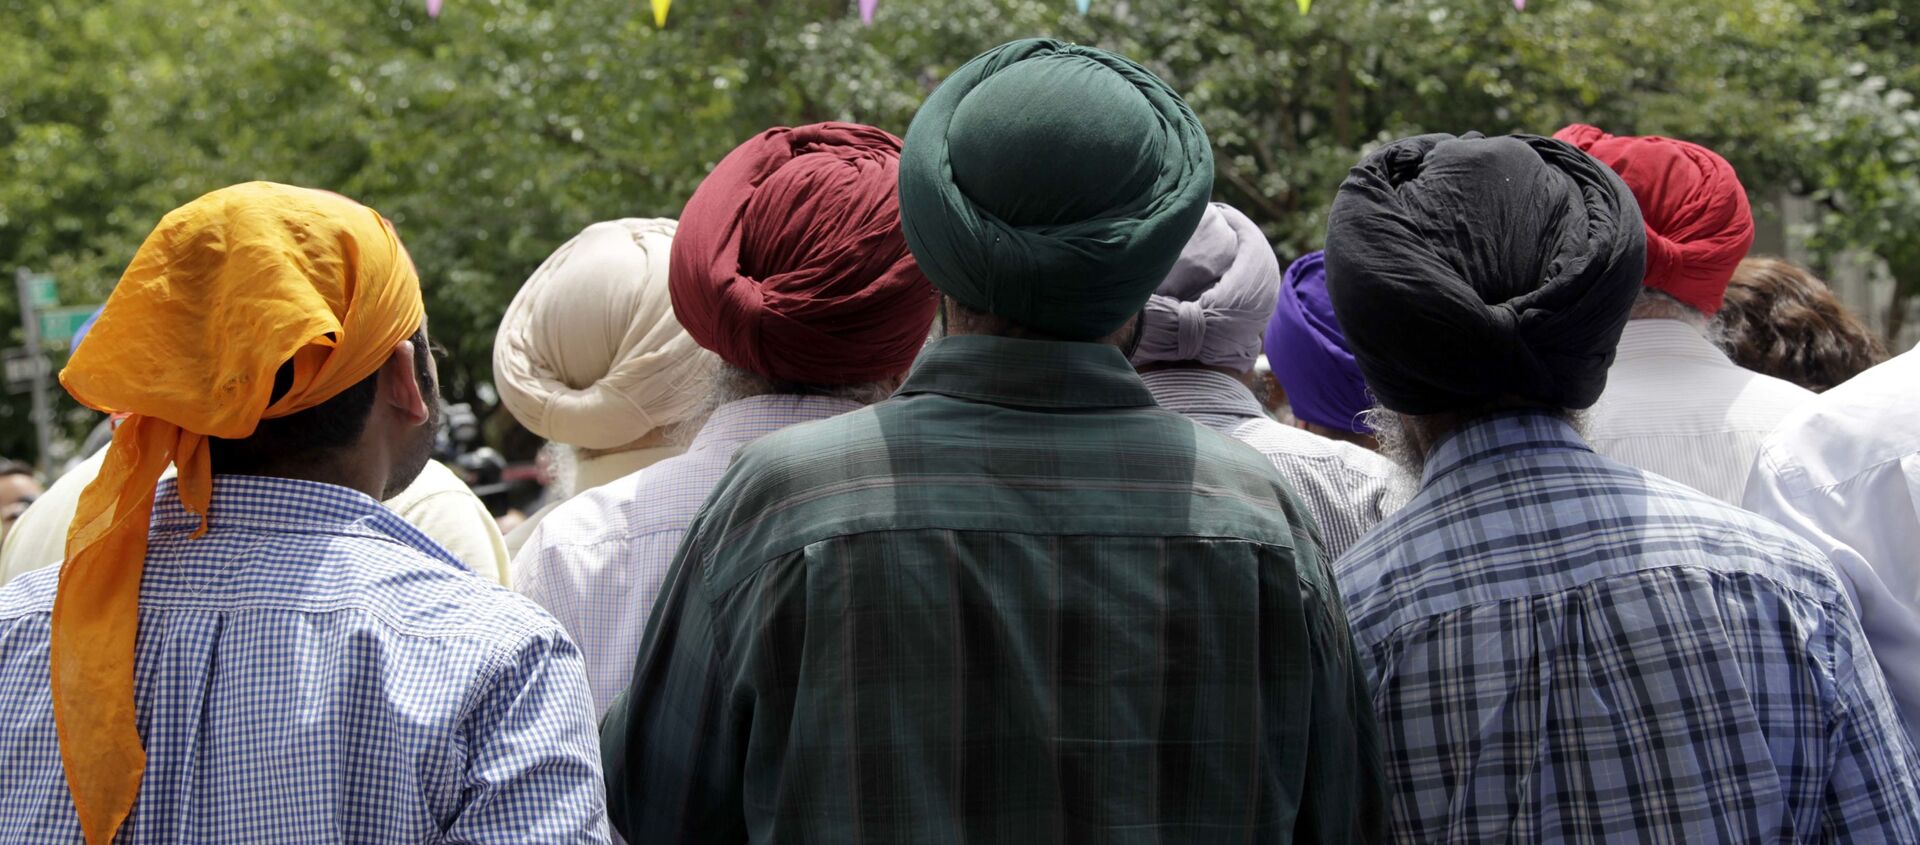 Members of the Sikh community, wearing turbans (File) - Sputnik International, 1920, 02.06.2021